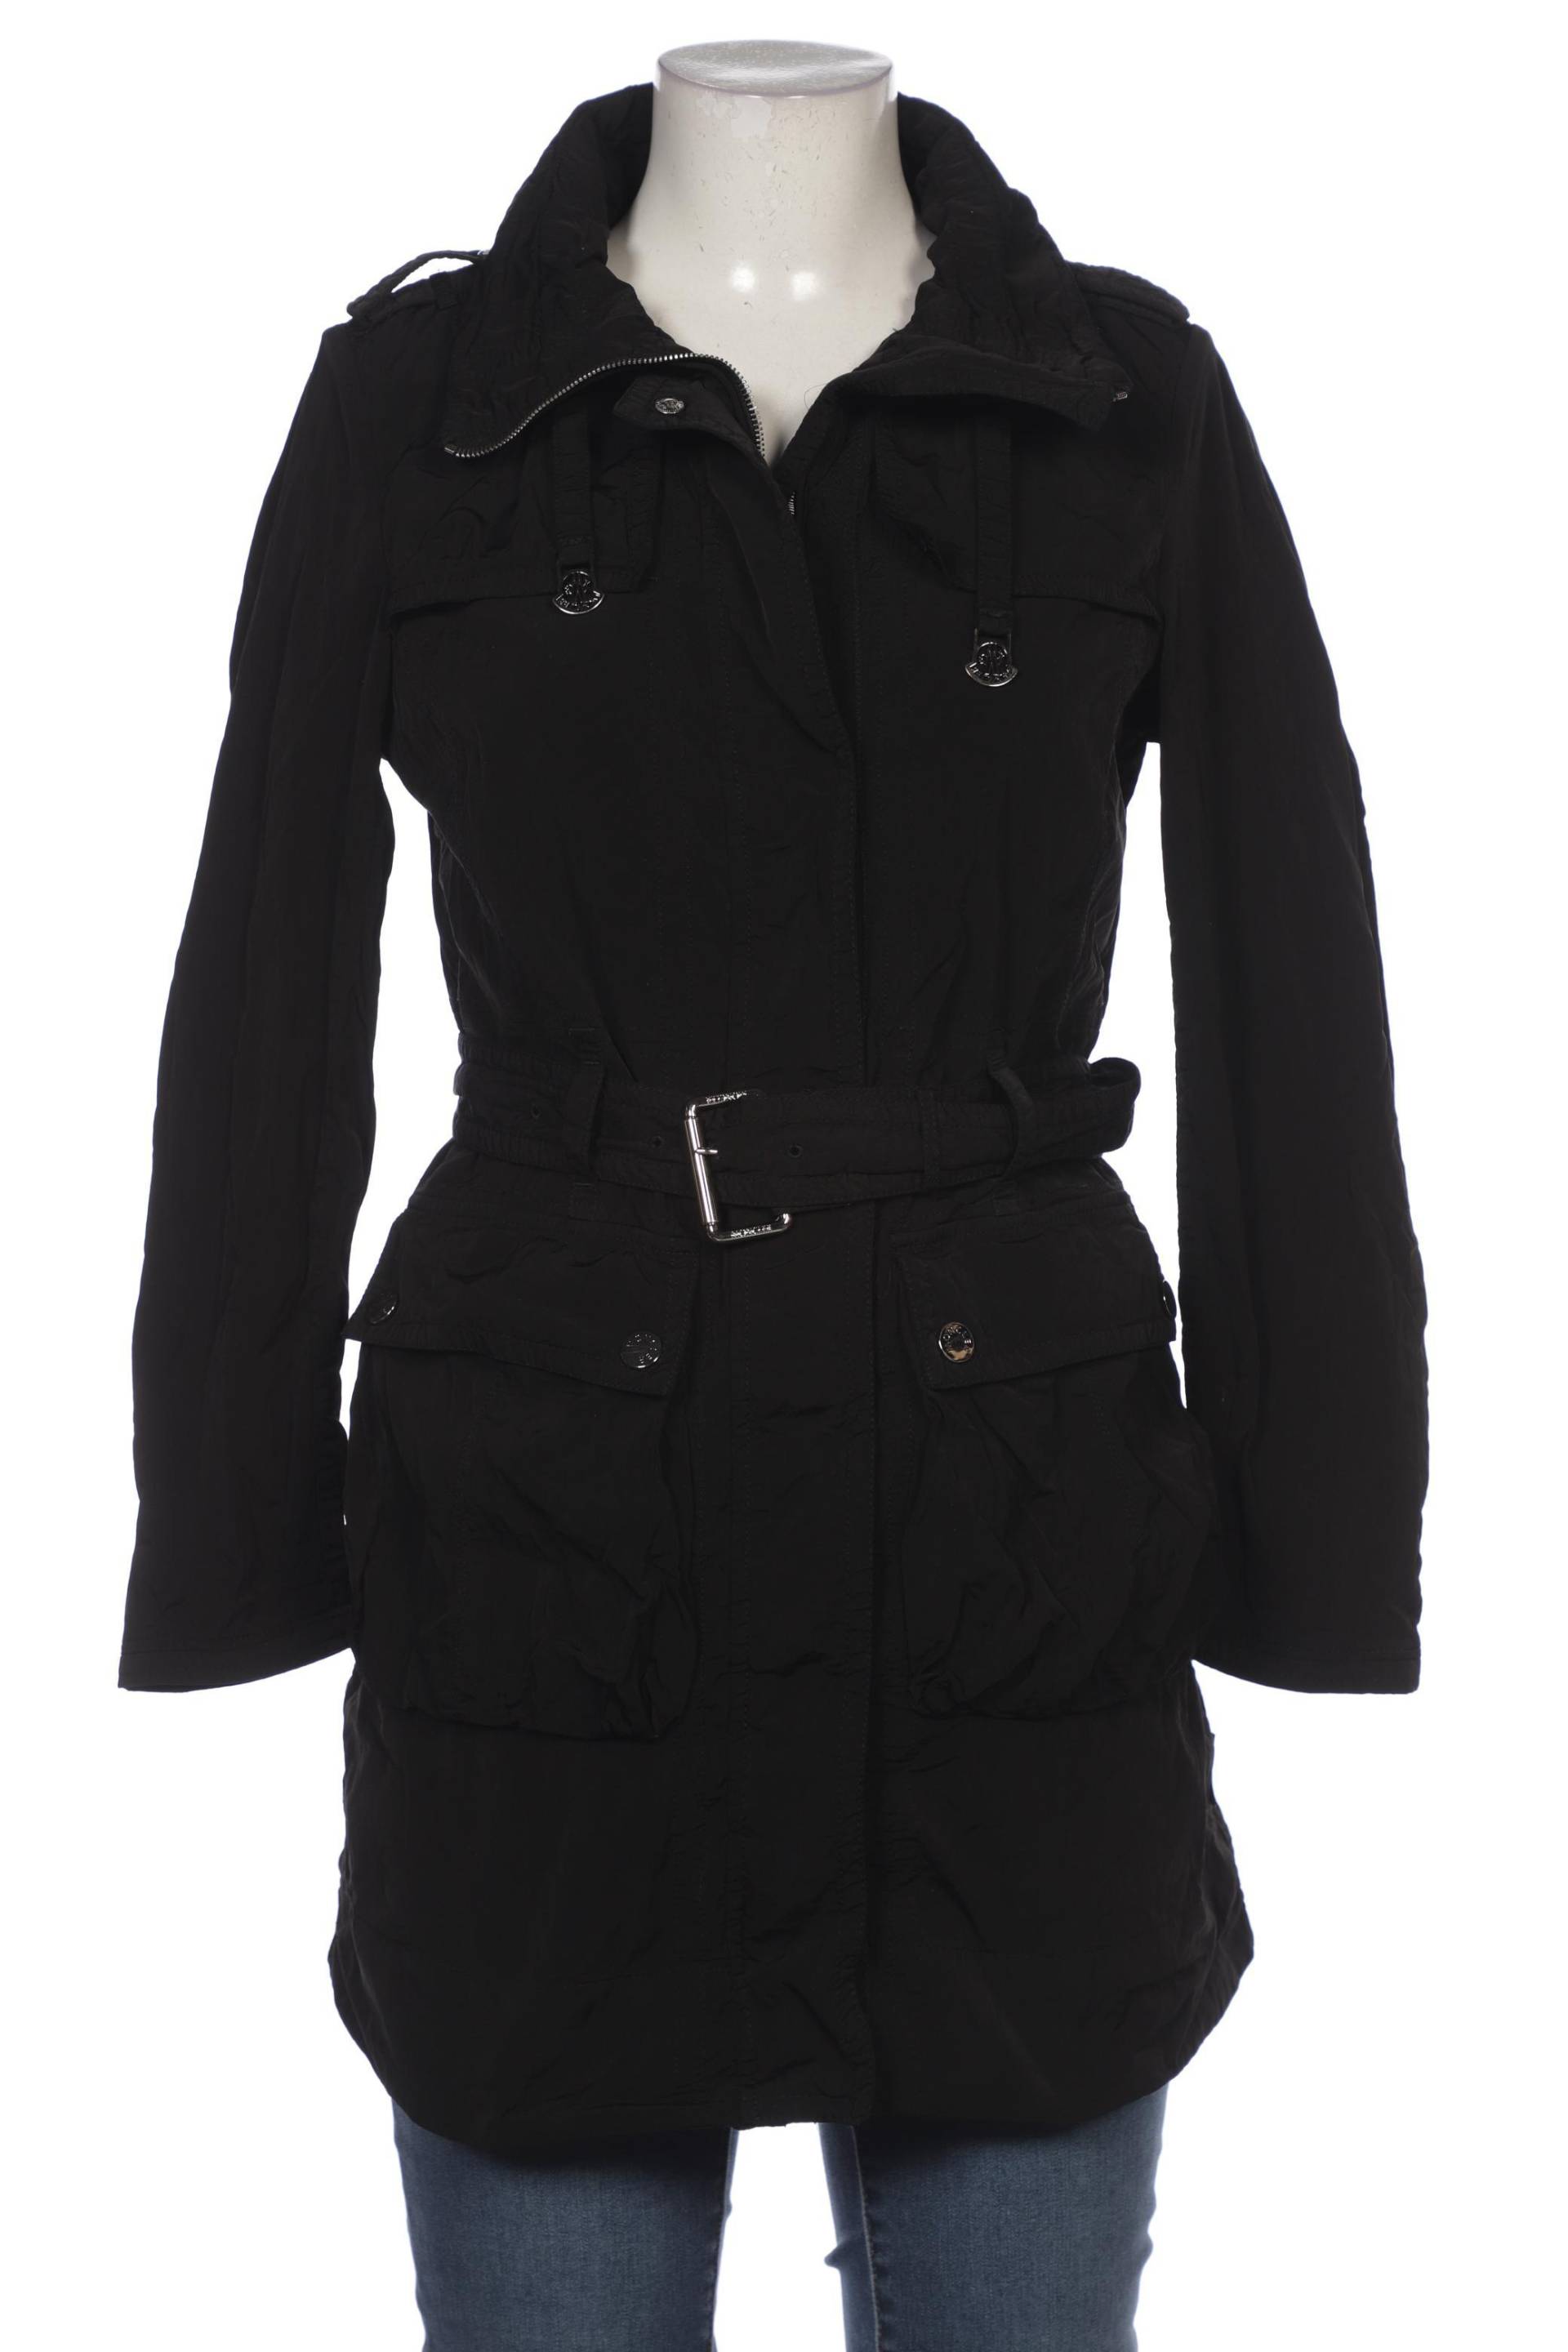 Moncler Damen Mantel, schwarz, Gr. 42 von Moncler